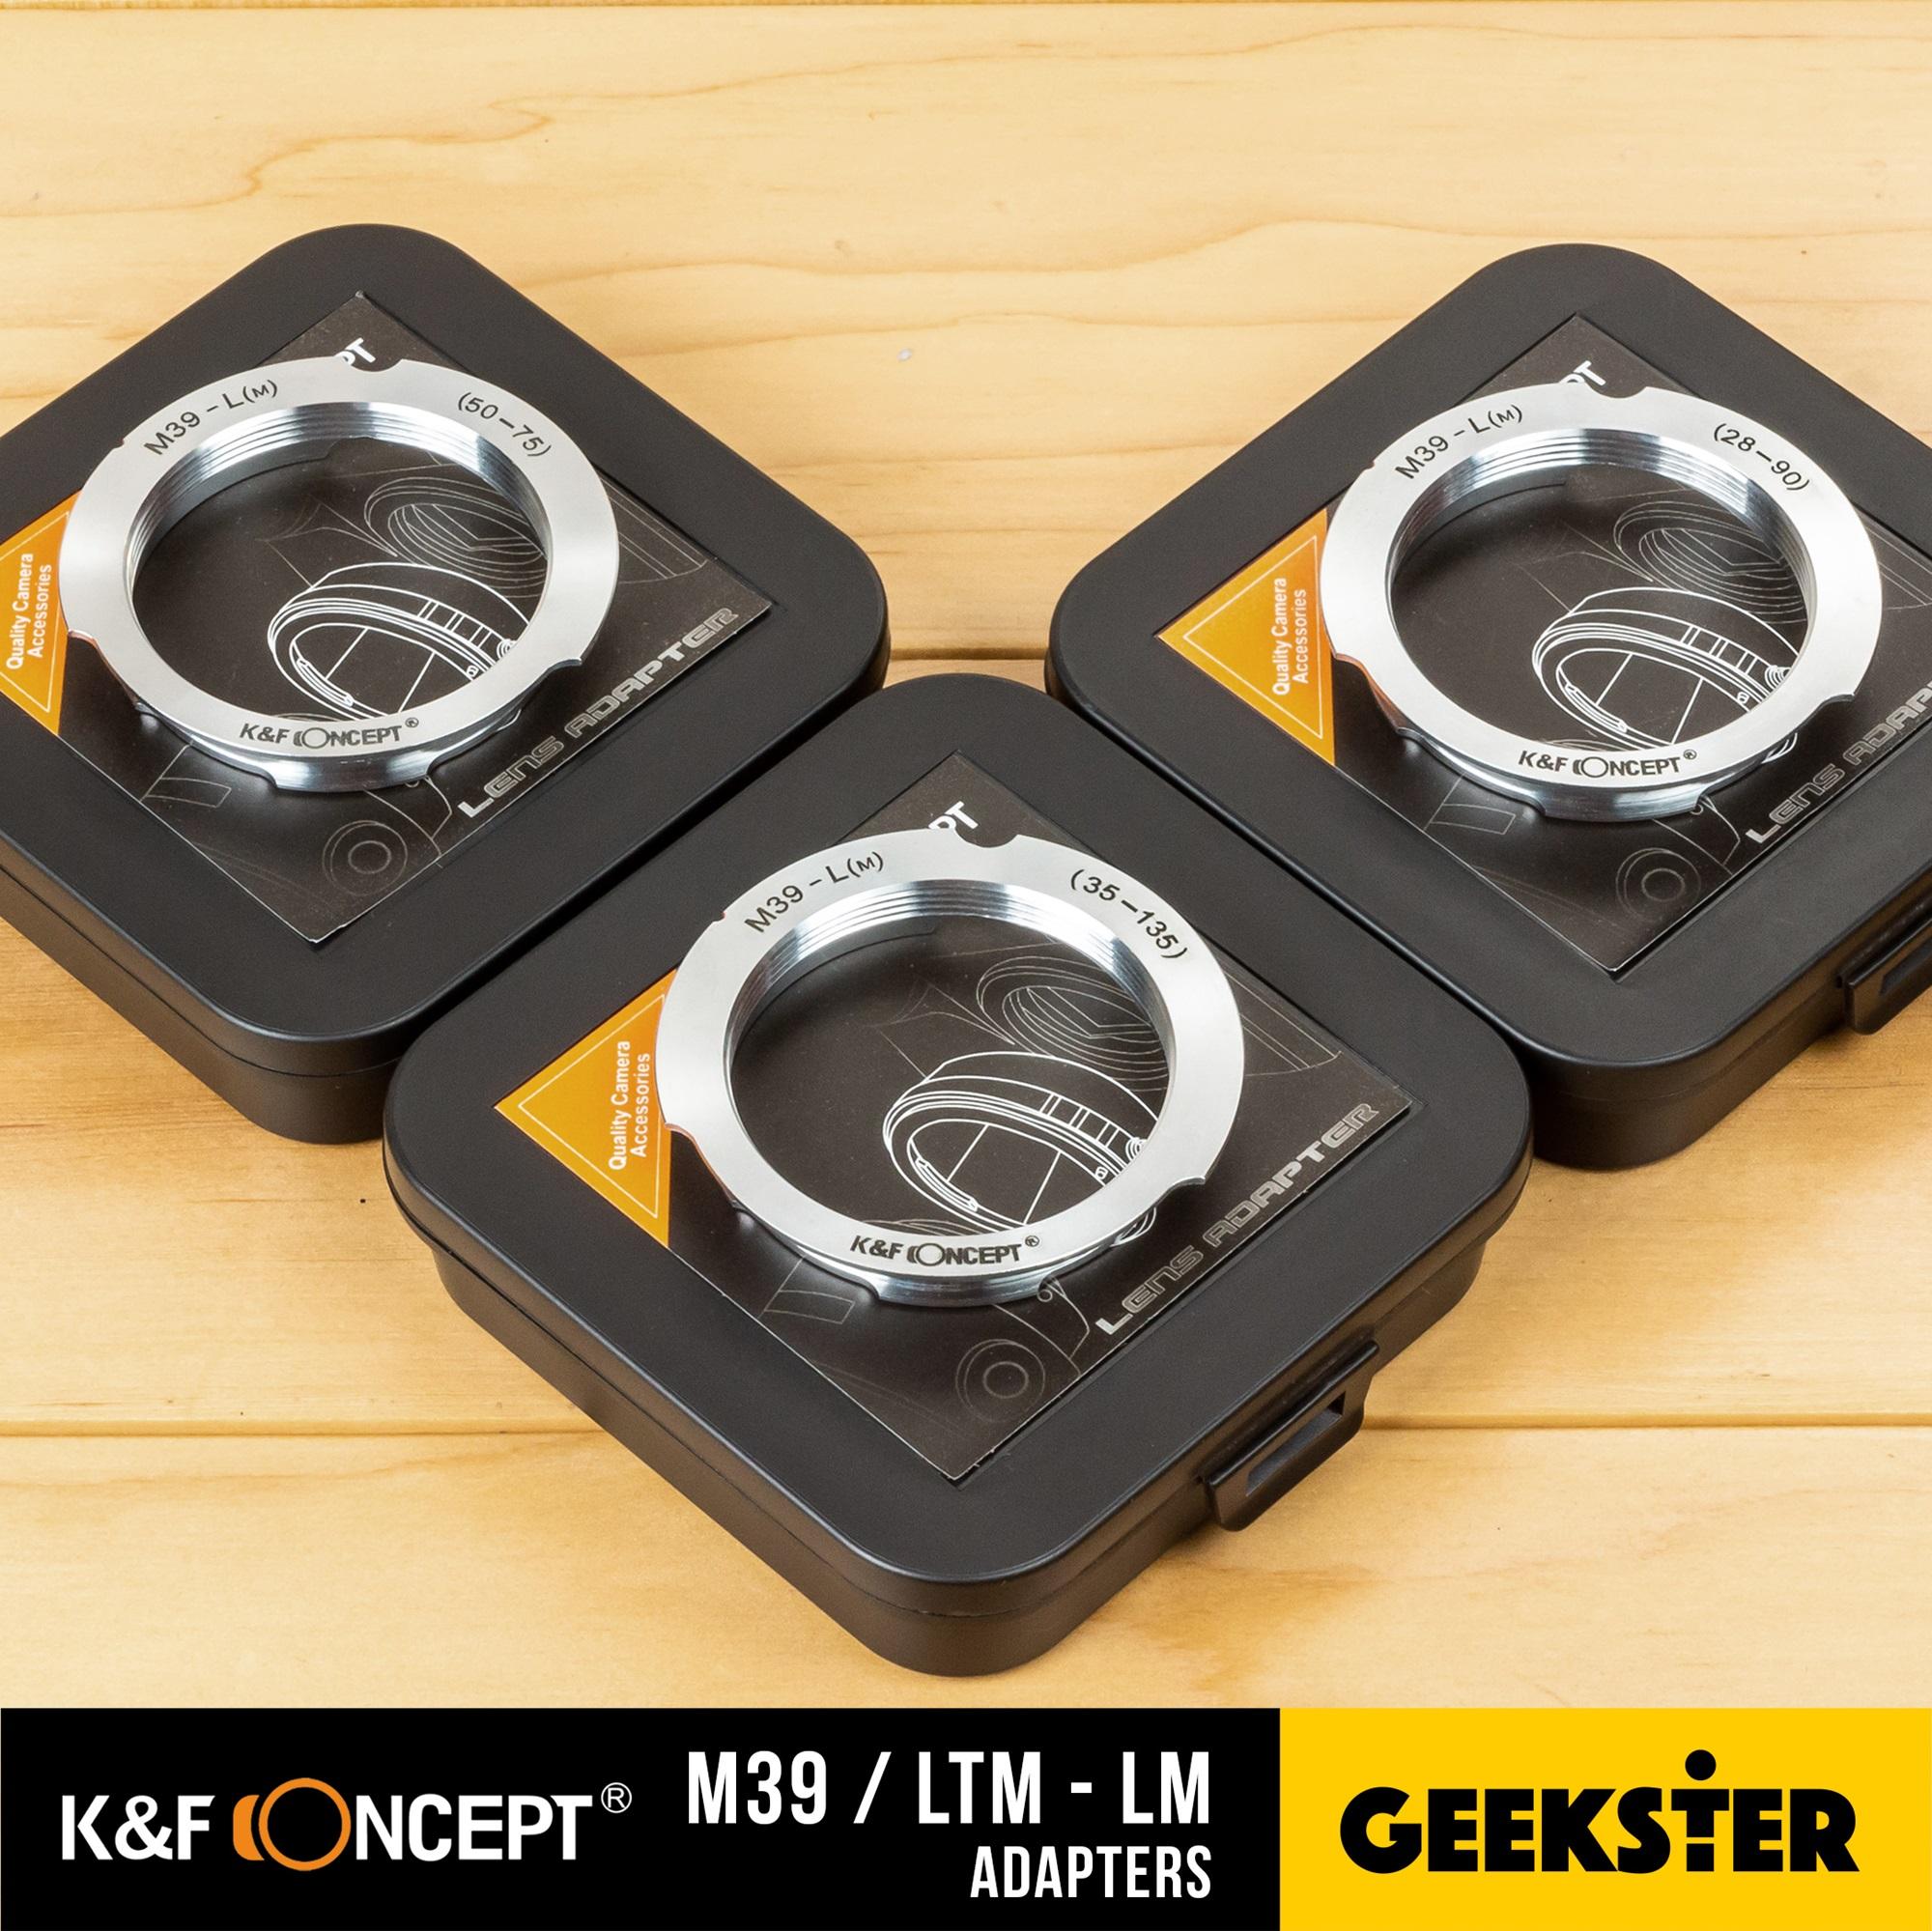 K&F M39-LM / LTM-LM Adapter แปลงเลนส์ Leica เมาท์ M39 / LTM / L39 เพื่อเอามาใส่กล้อง Leica M ( Lens mount adapter Mount M39 For LM ) ( เมาท์แปลง อแดปเตอร์ ) ( M39-LM / LTM-LM / L39-LM ) ( Geekster )